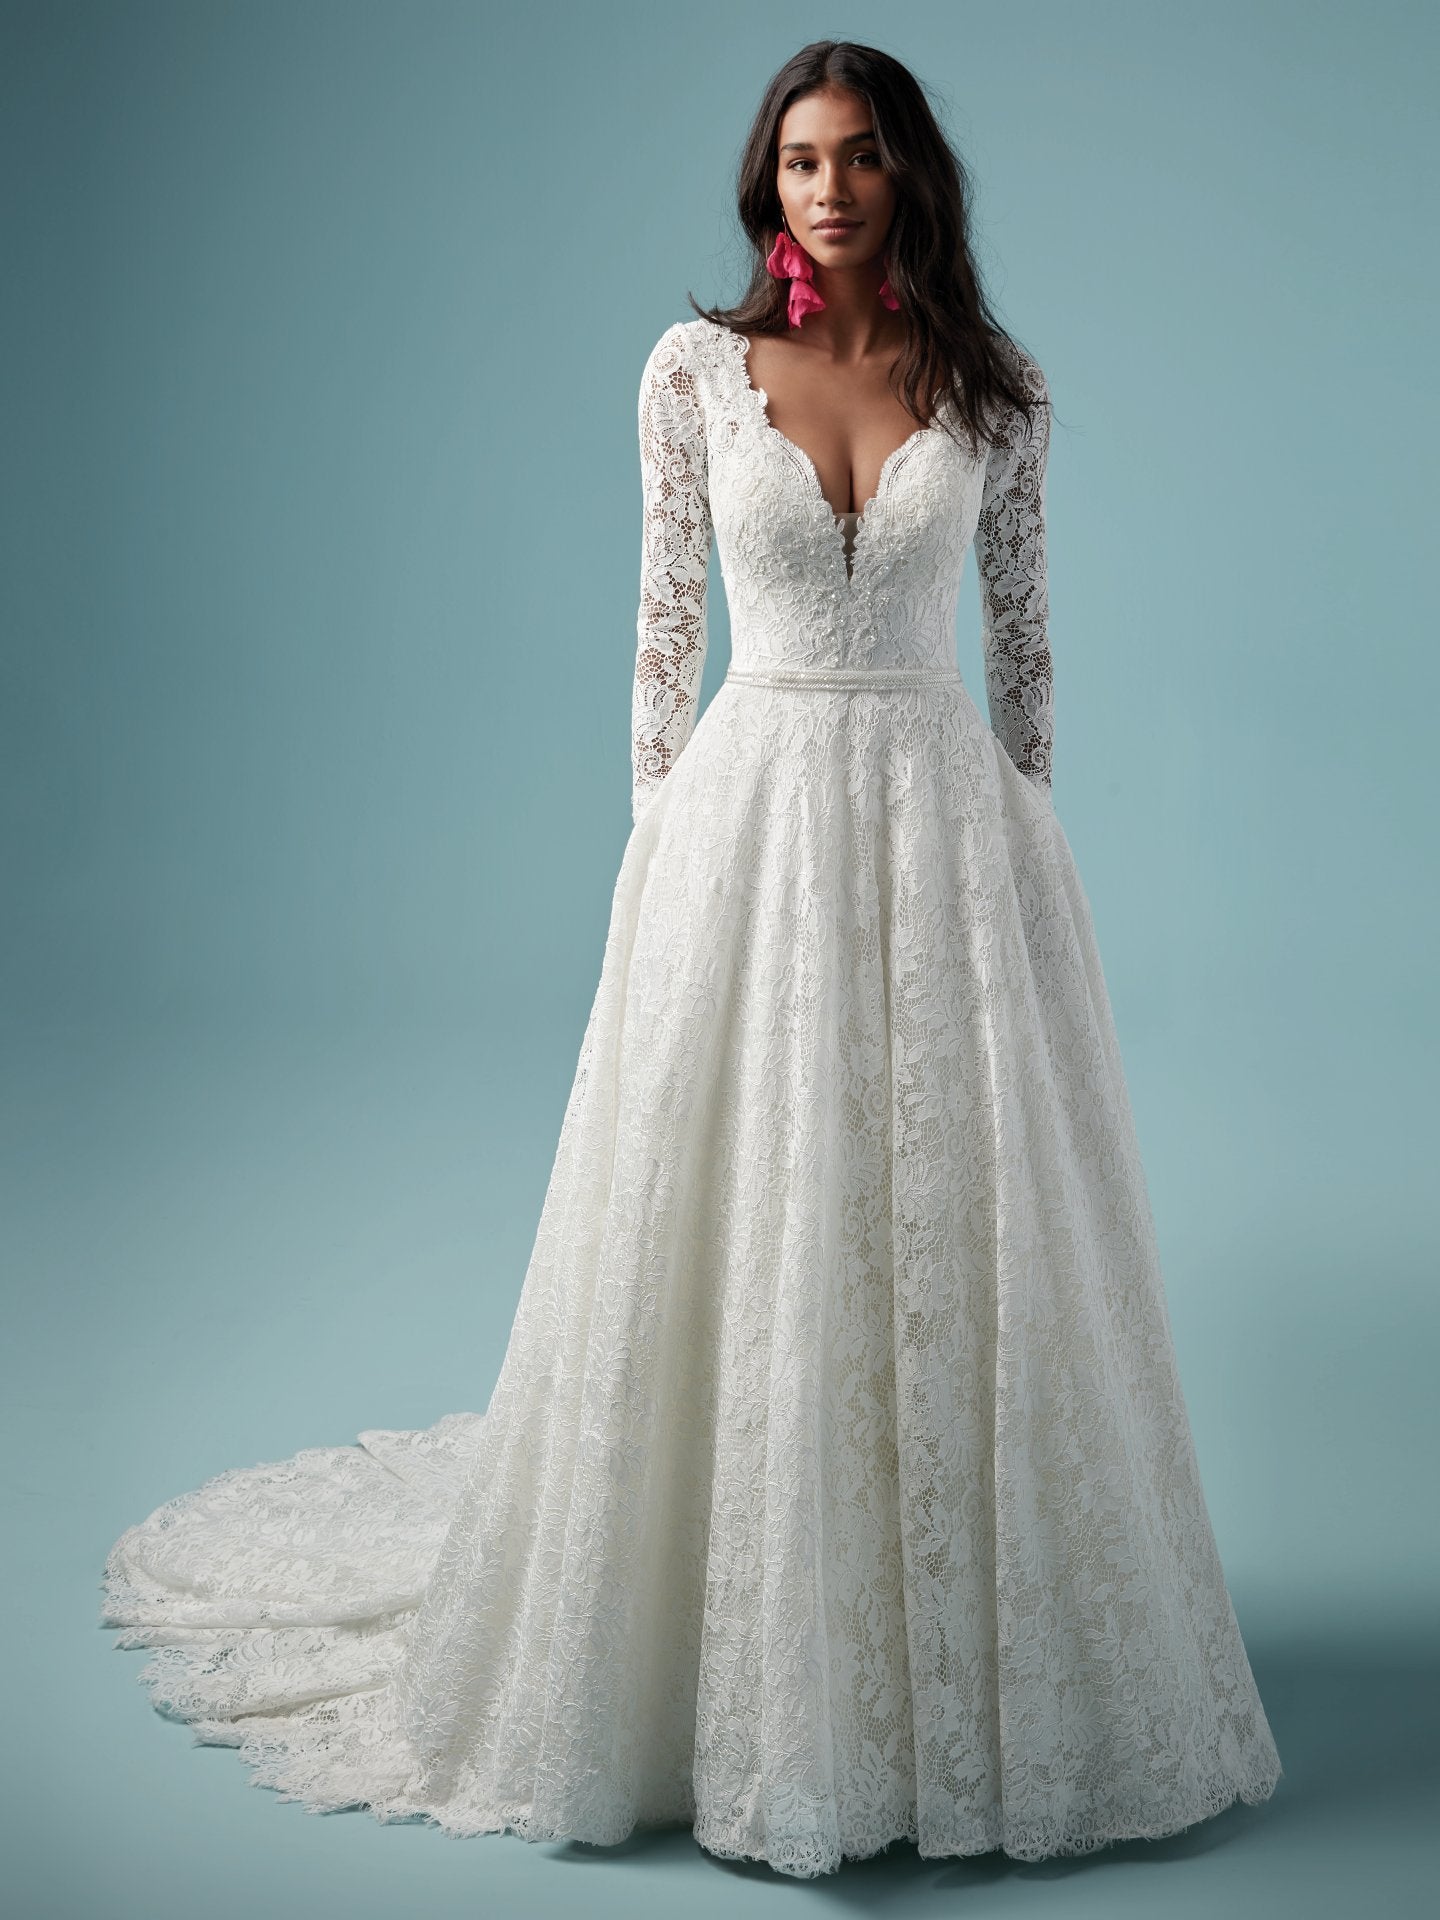 Lace Vneckline Long Sleeve Ball Gown Wedding Dress